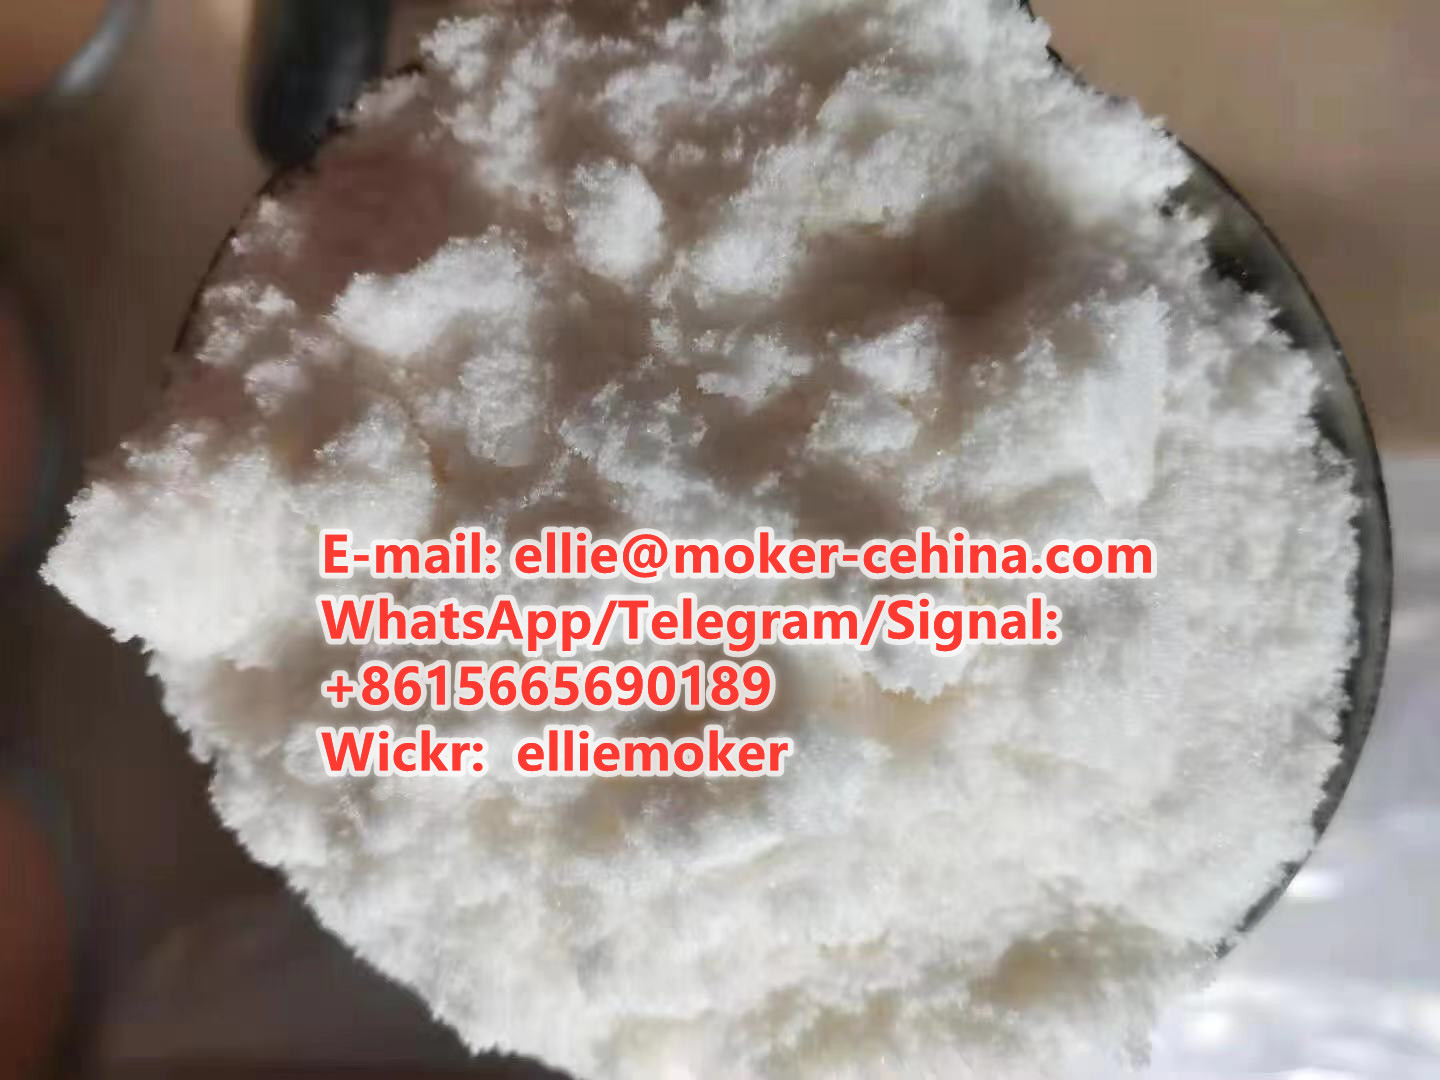 Manufacturer Supply C5H12ClNO2 4, 4-Piperidinediol Hydrochloride CAS 40064-34-4